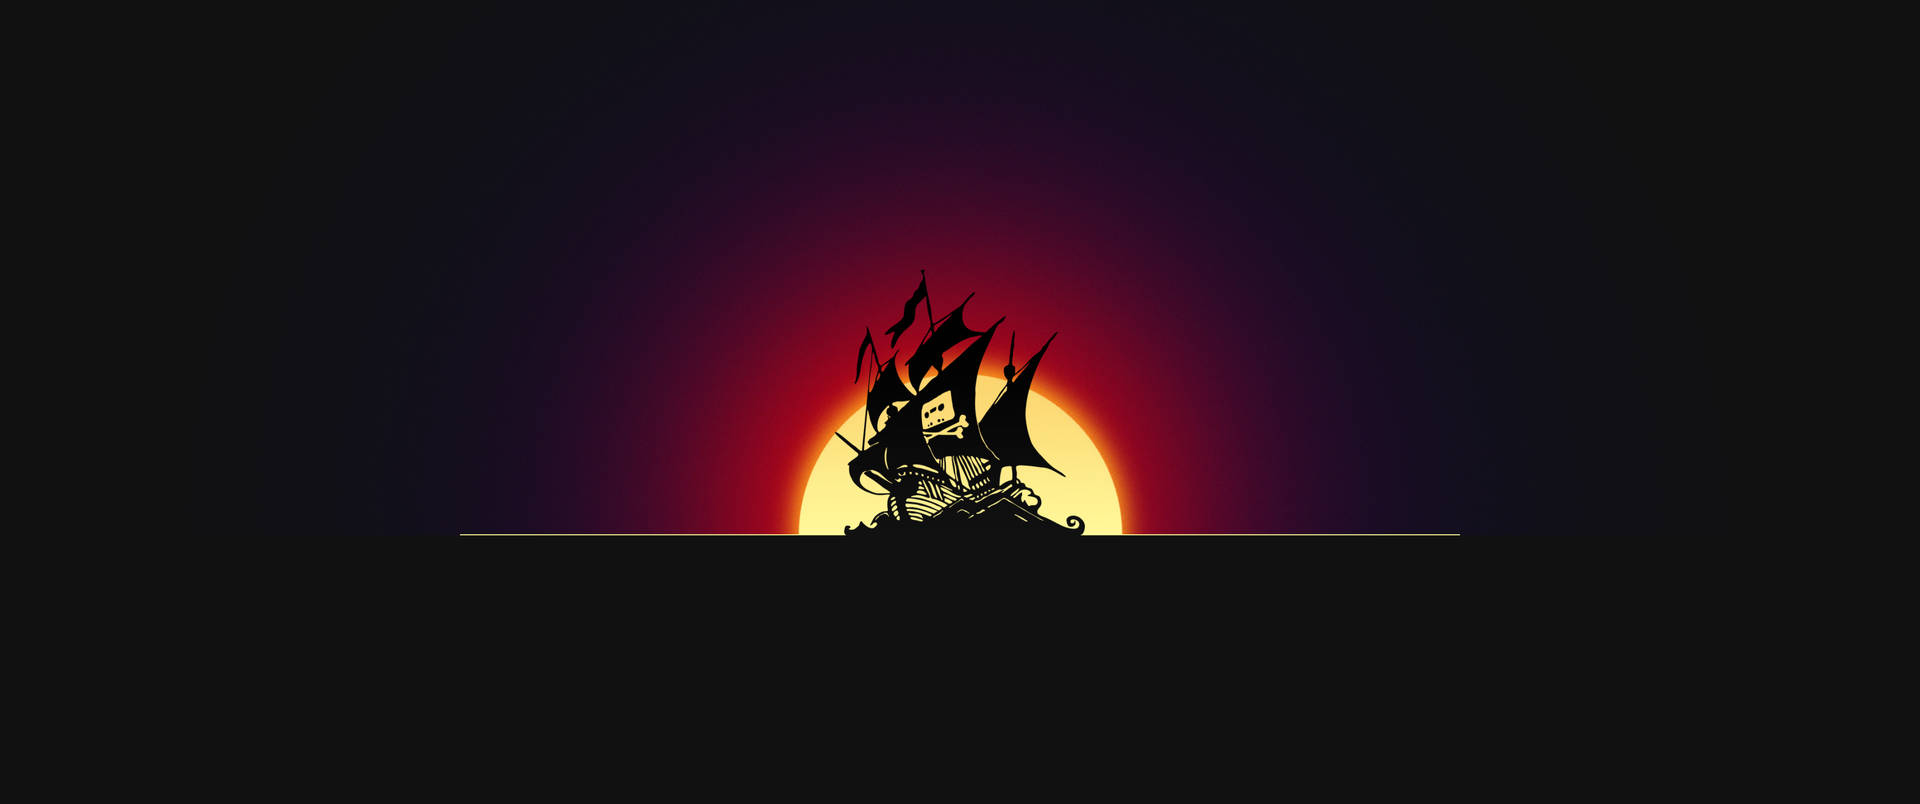 4K Pirate Ship Silhouette During Sunset Wallpaper